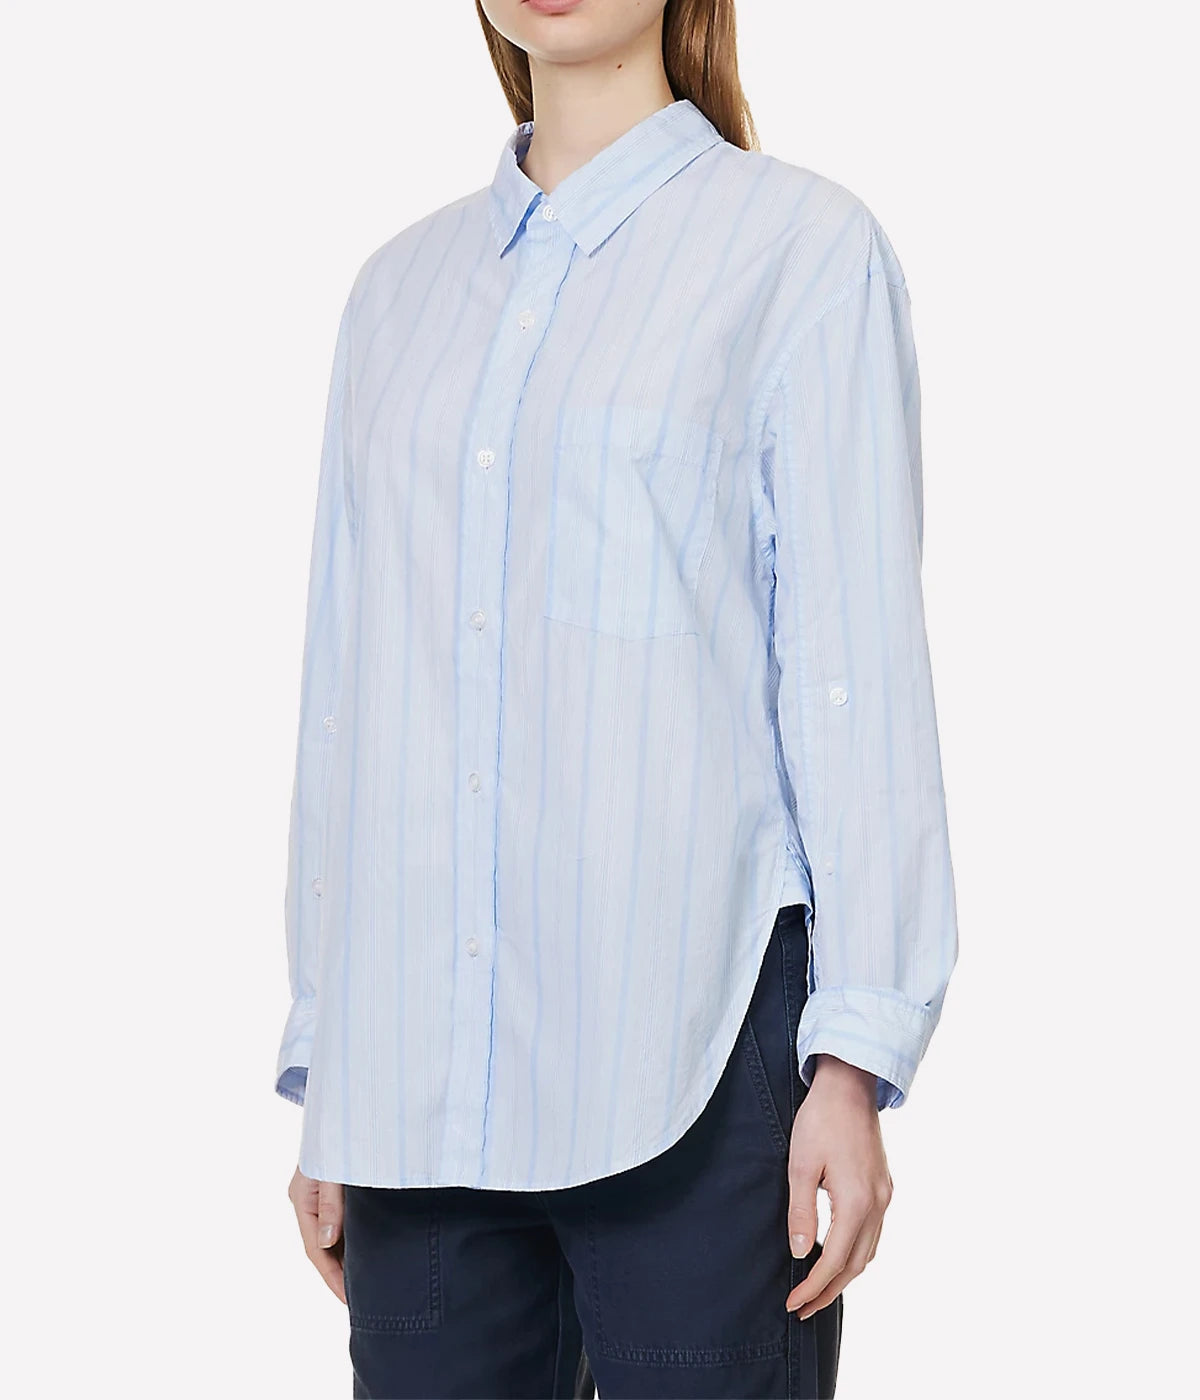 Kayla Shirt in Sky Stripe